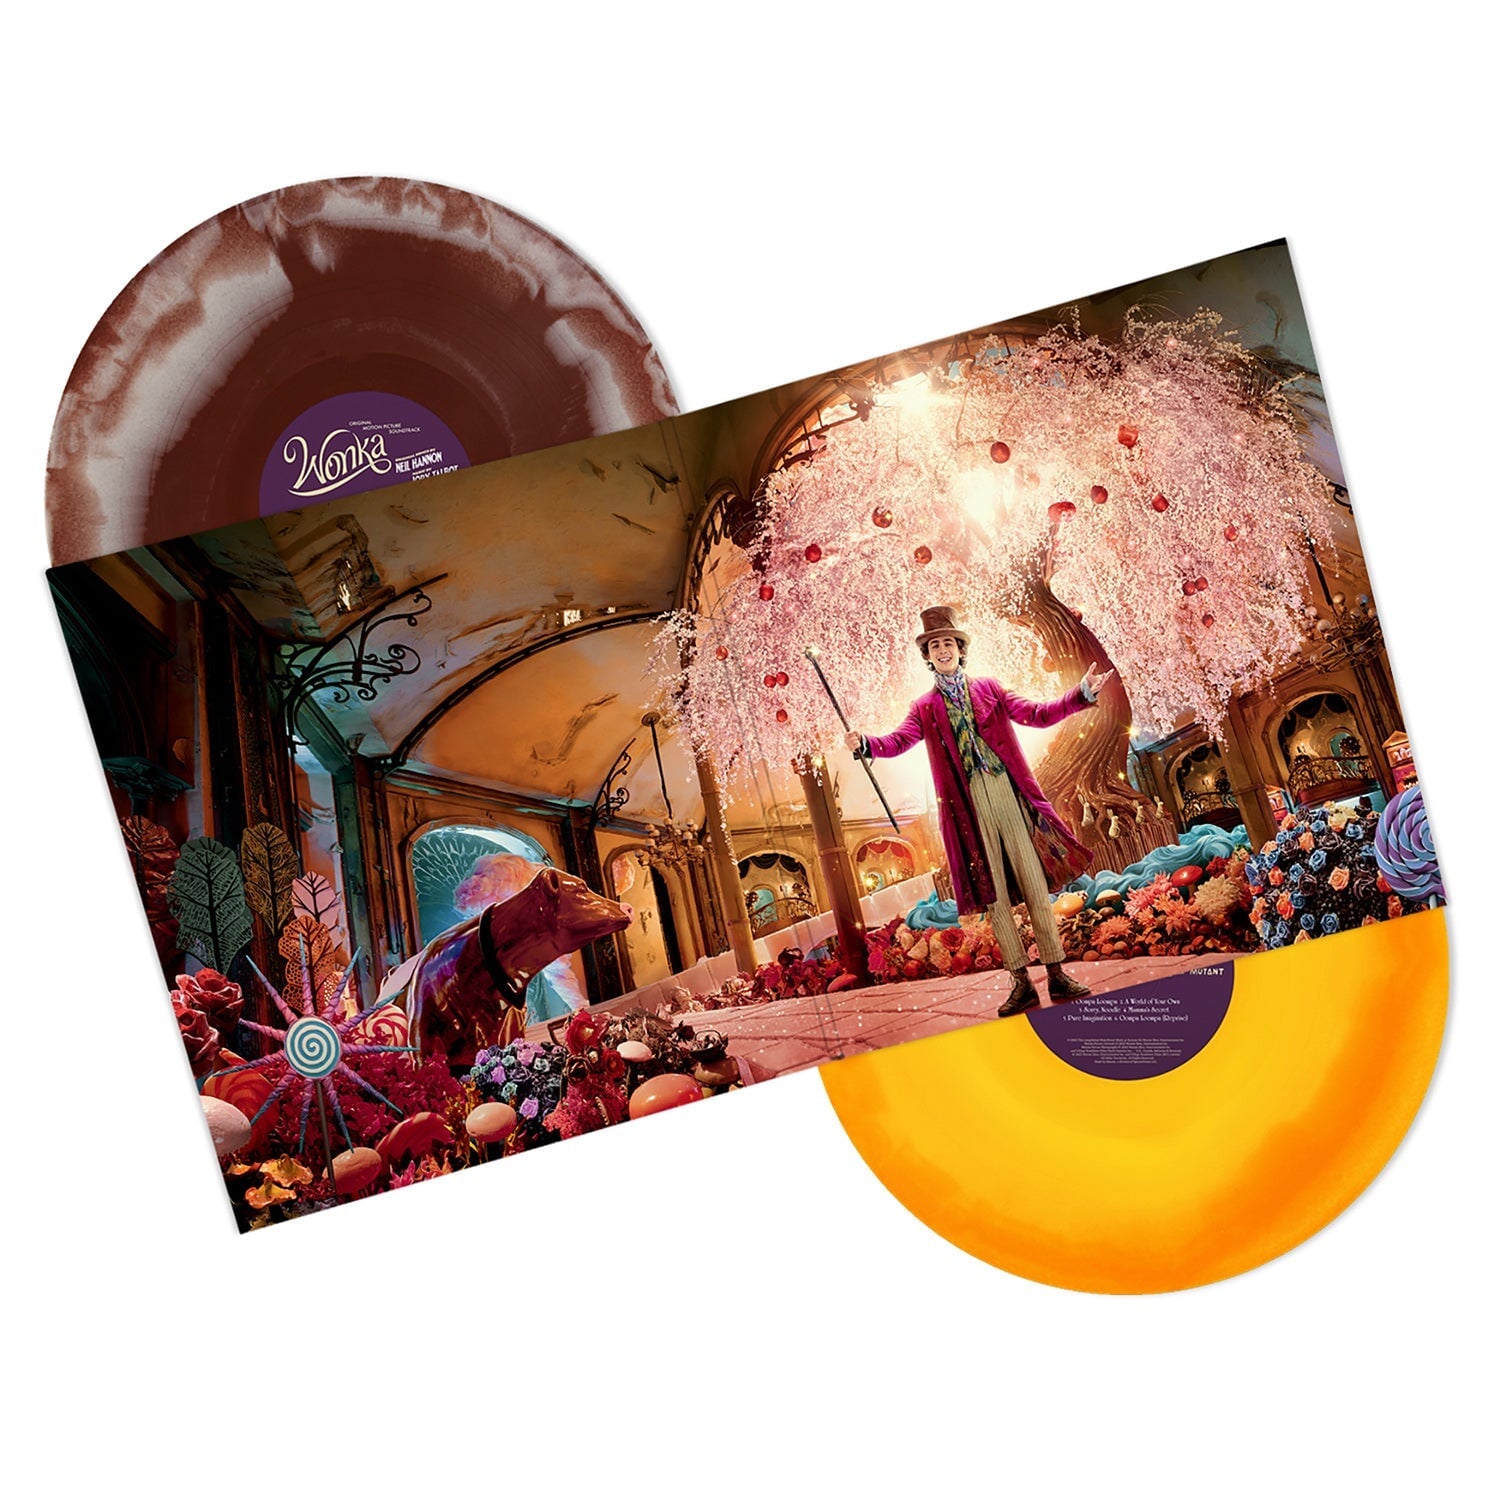 Wonka (Original Motion Picture Soundtrack) (Exclusive Orange with Yellow & Chocolate Cream Swirl Vinyl 2 LP)